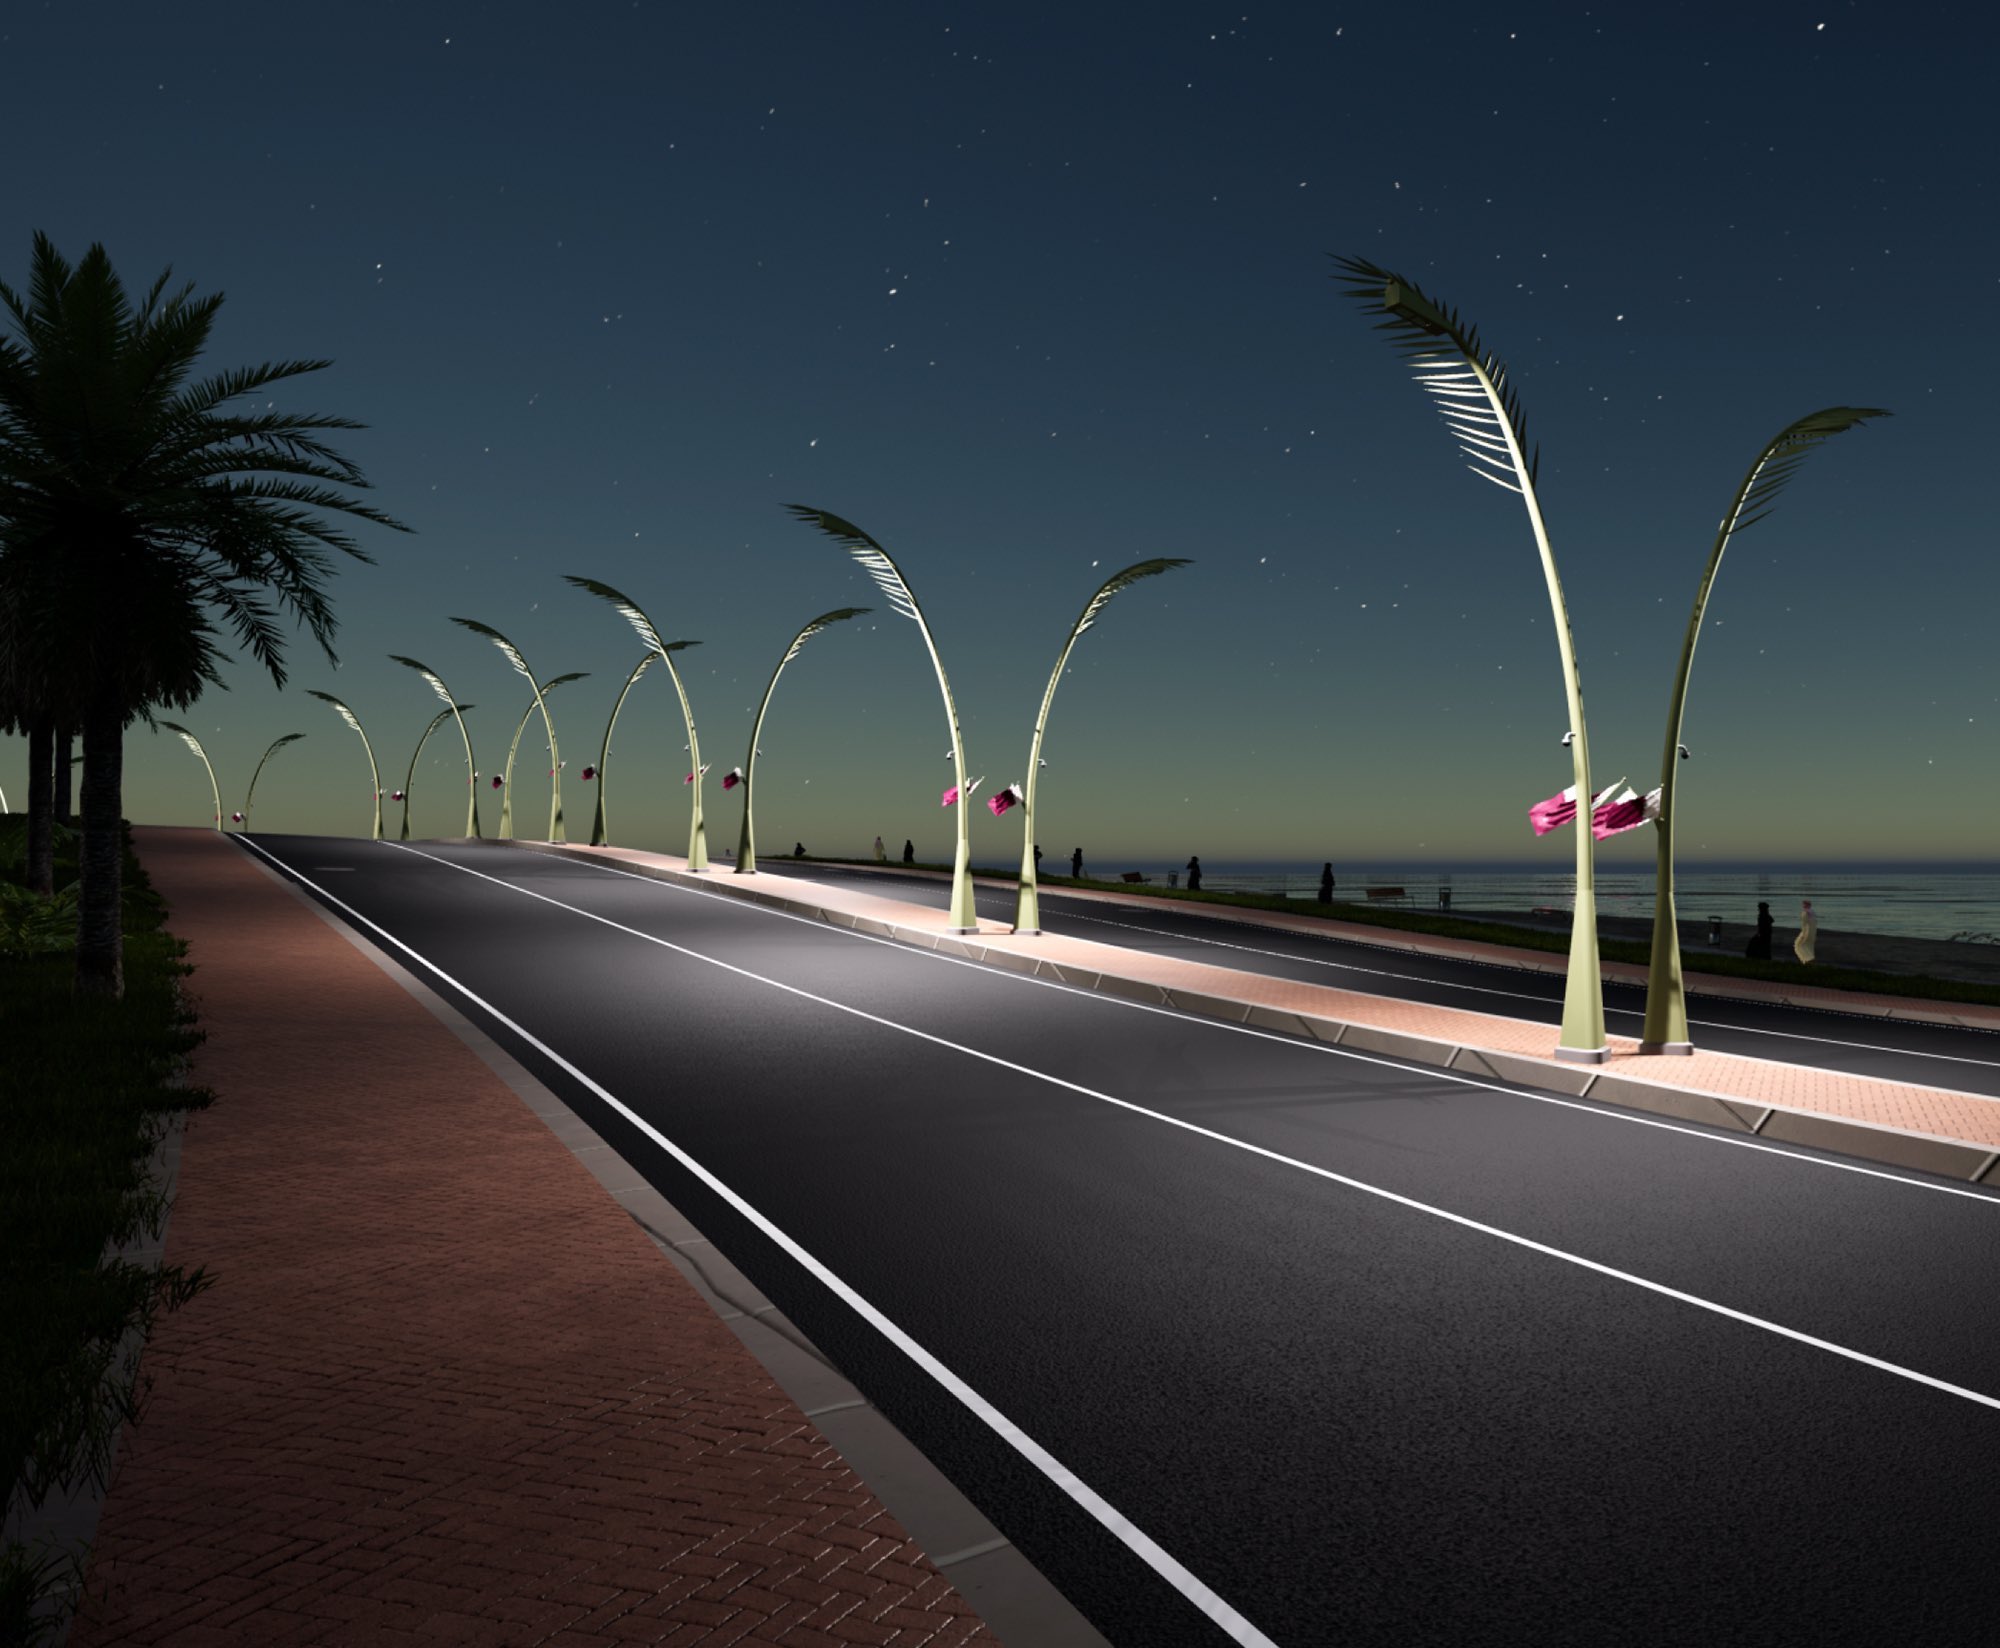 Installation of Decorative Light Poles on Doha Corniche Starts